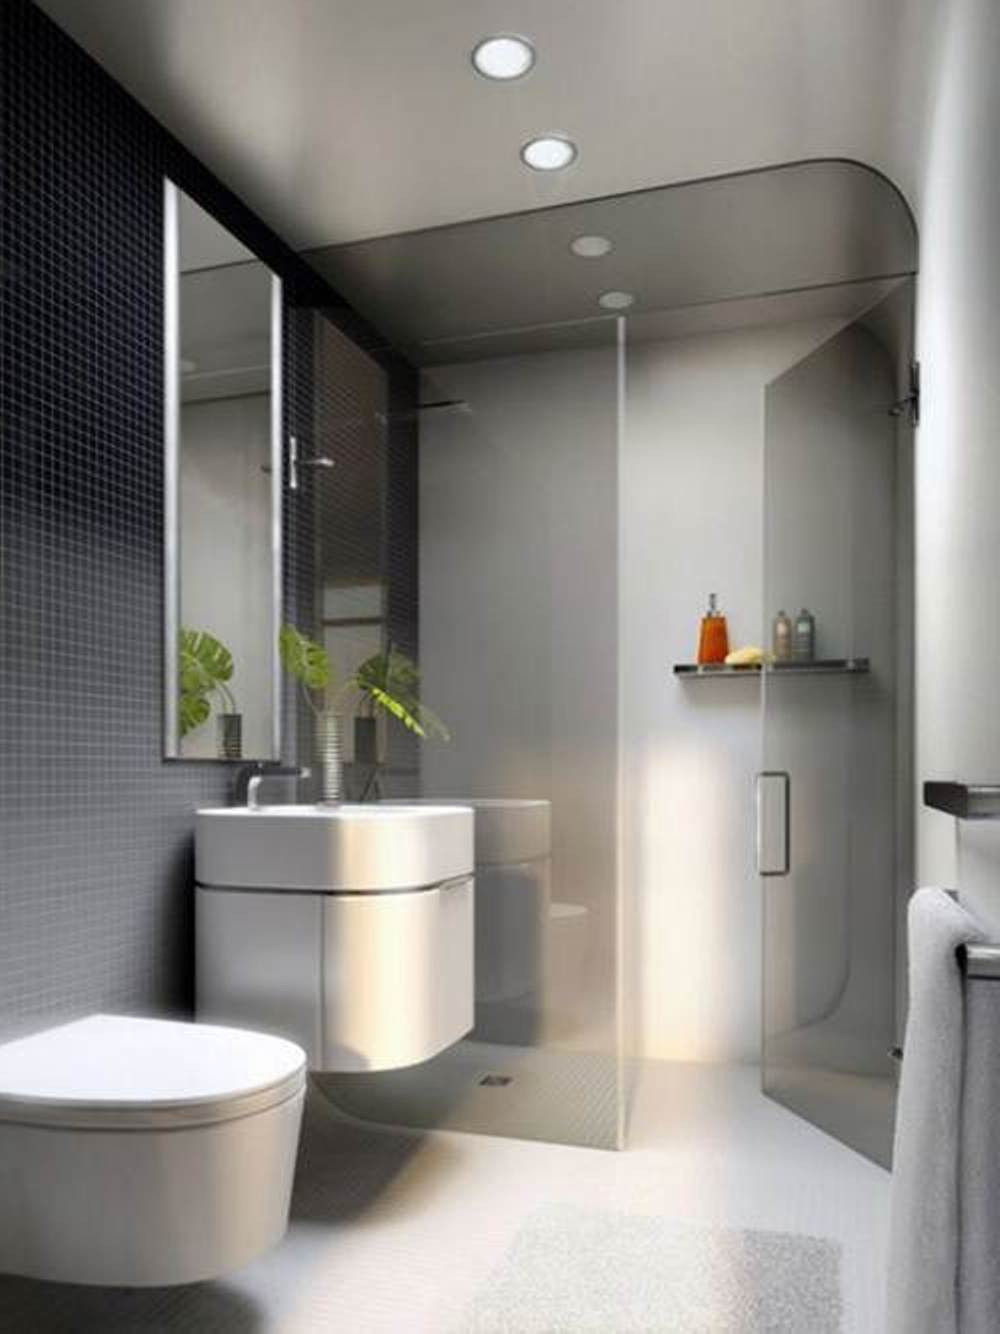 Modern Bathroom Tile Designs
 Top 10 Modern Bathroom Design Ideas 2017 TheyDesign